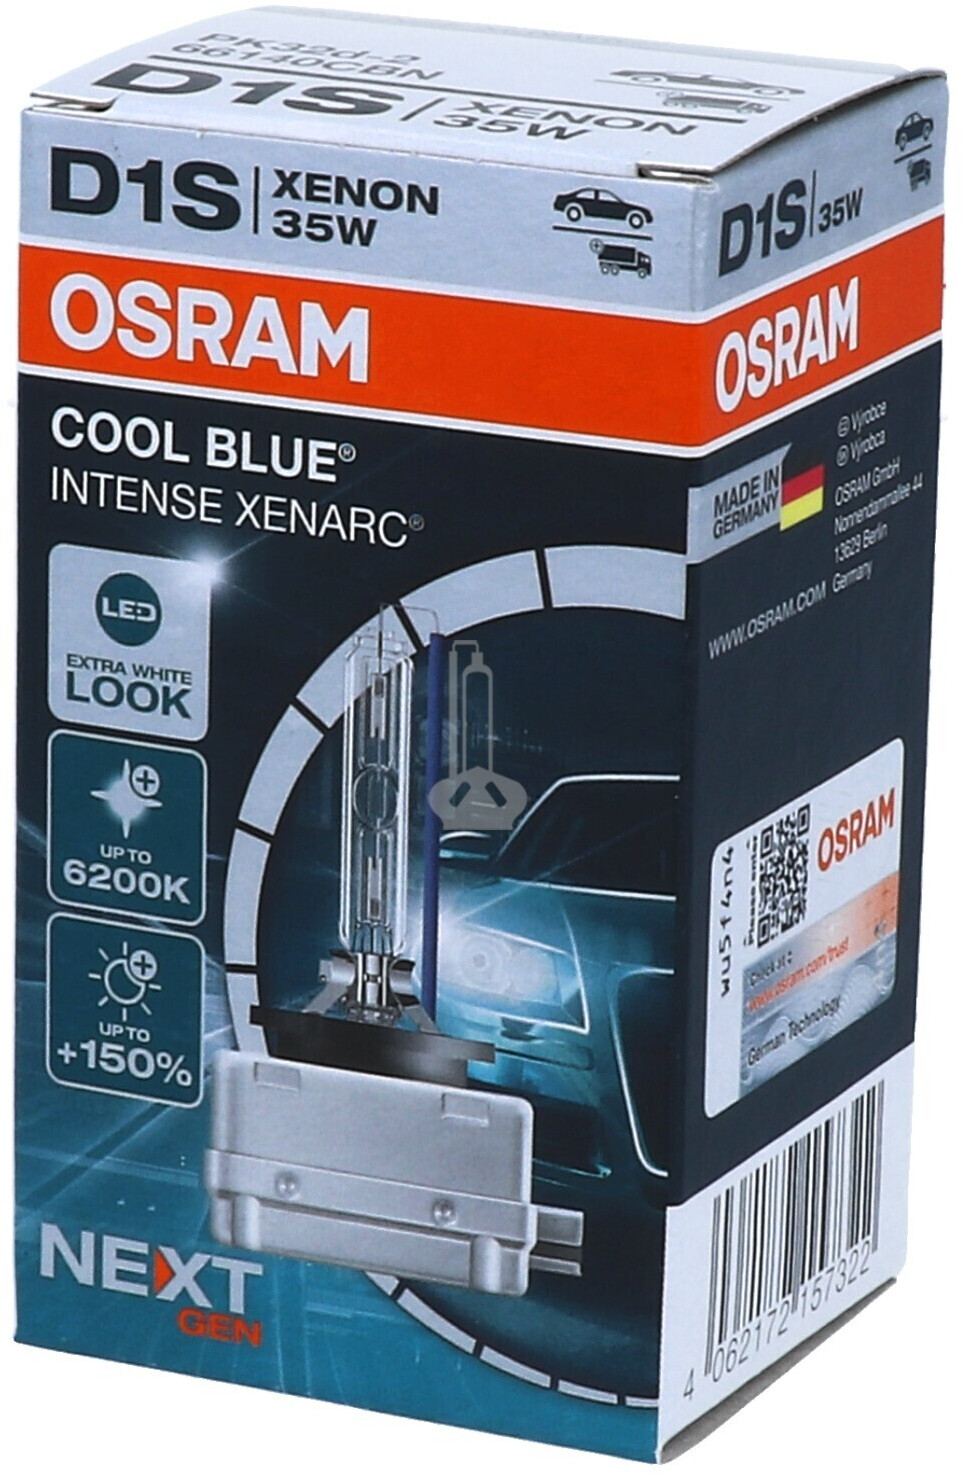 Osram COOL BLUE Intense Xenarc D1S 35W (66140CBN) ab € 59,37